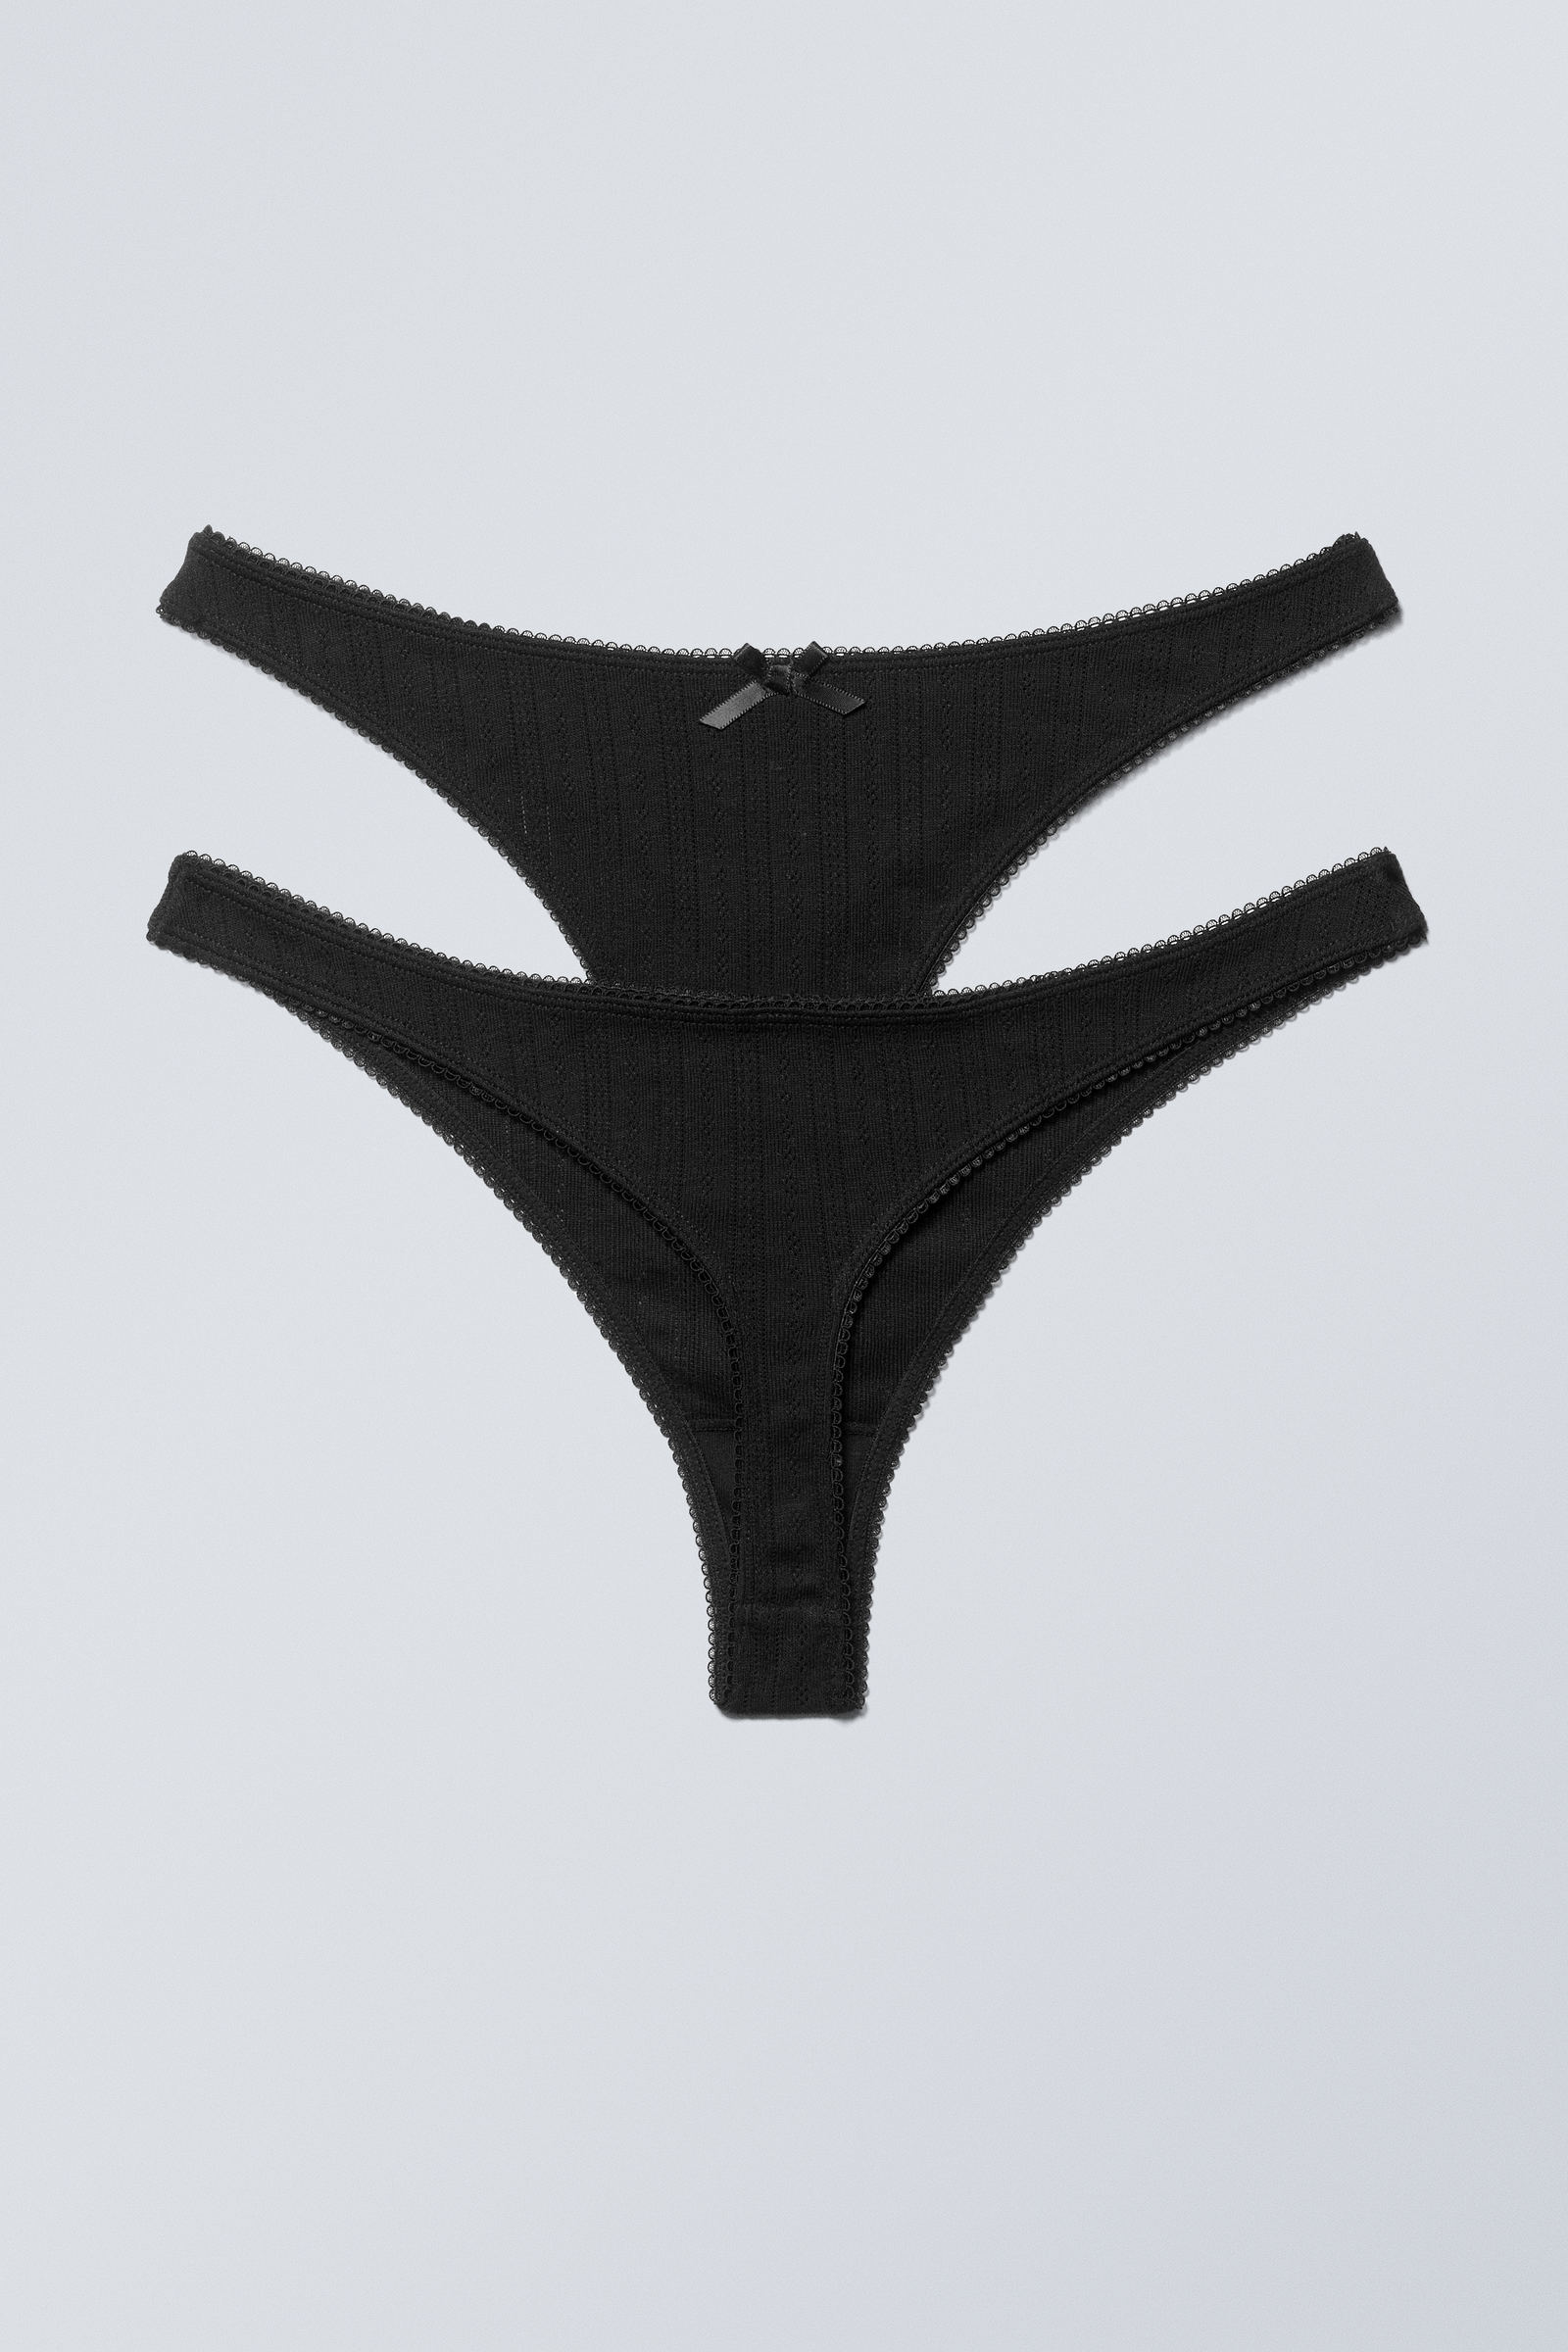 No Boundaries Women's Lace Thong Panties, 5-Pack